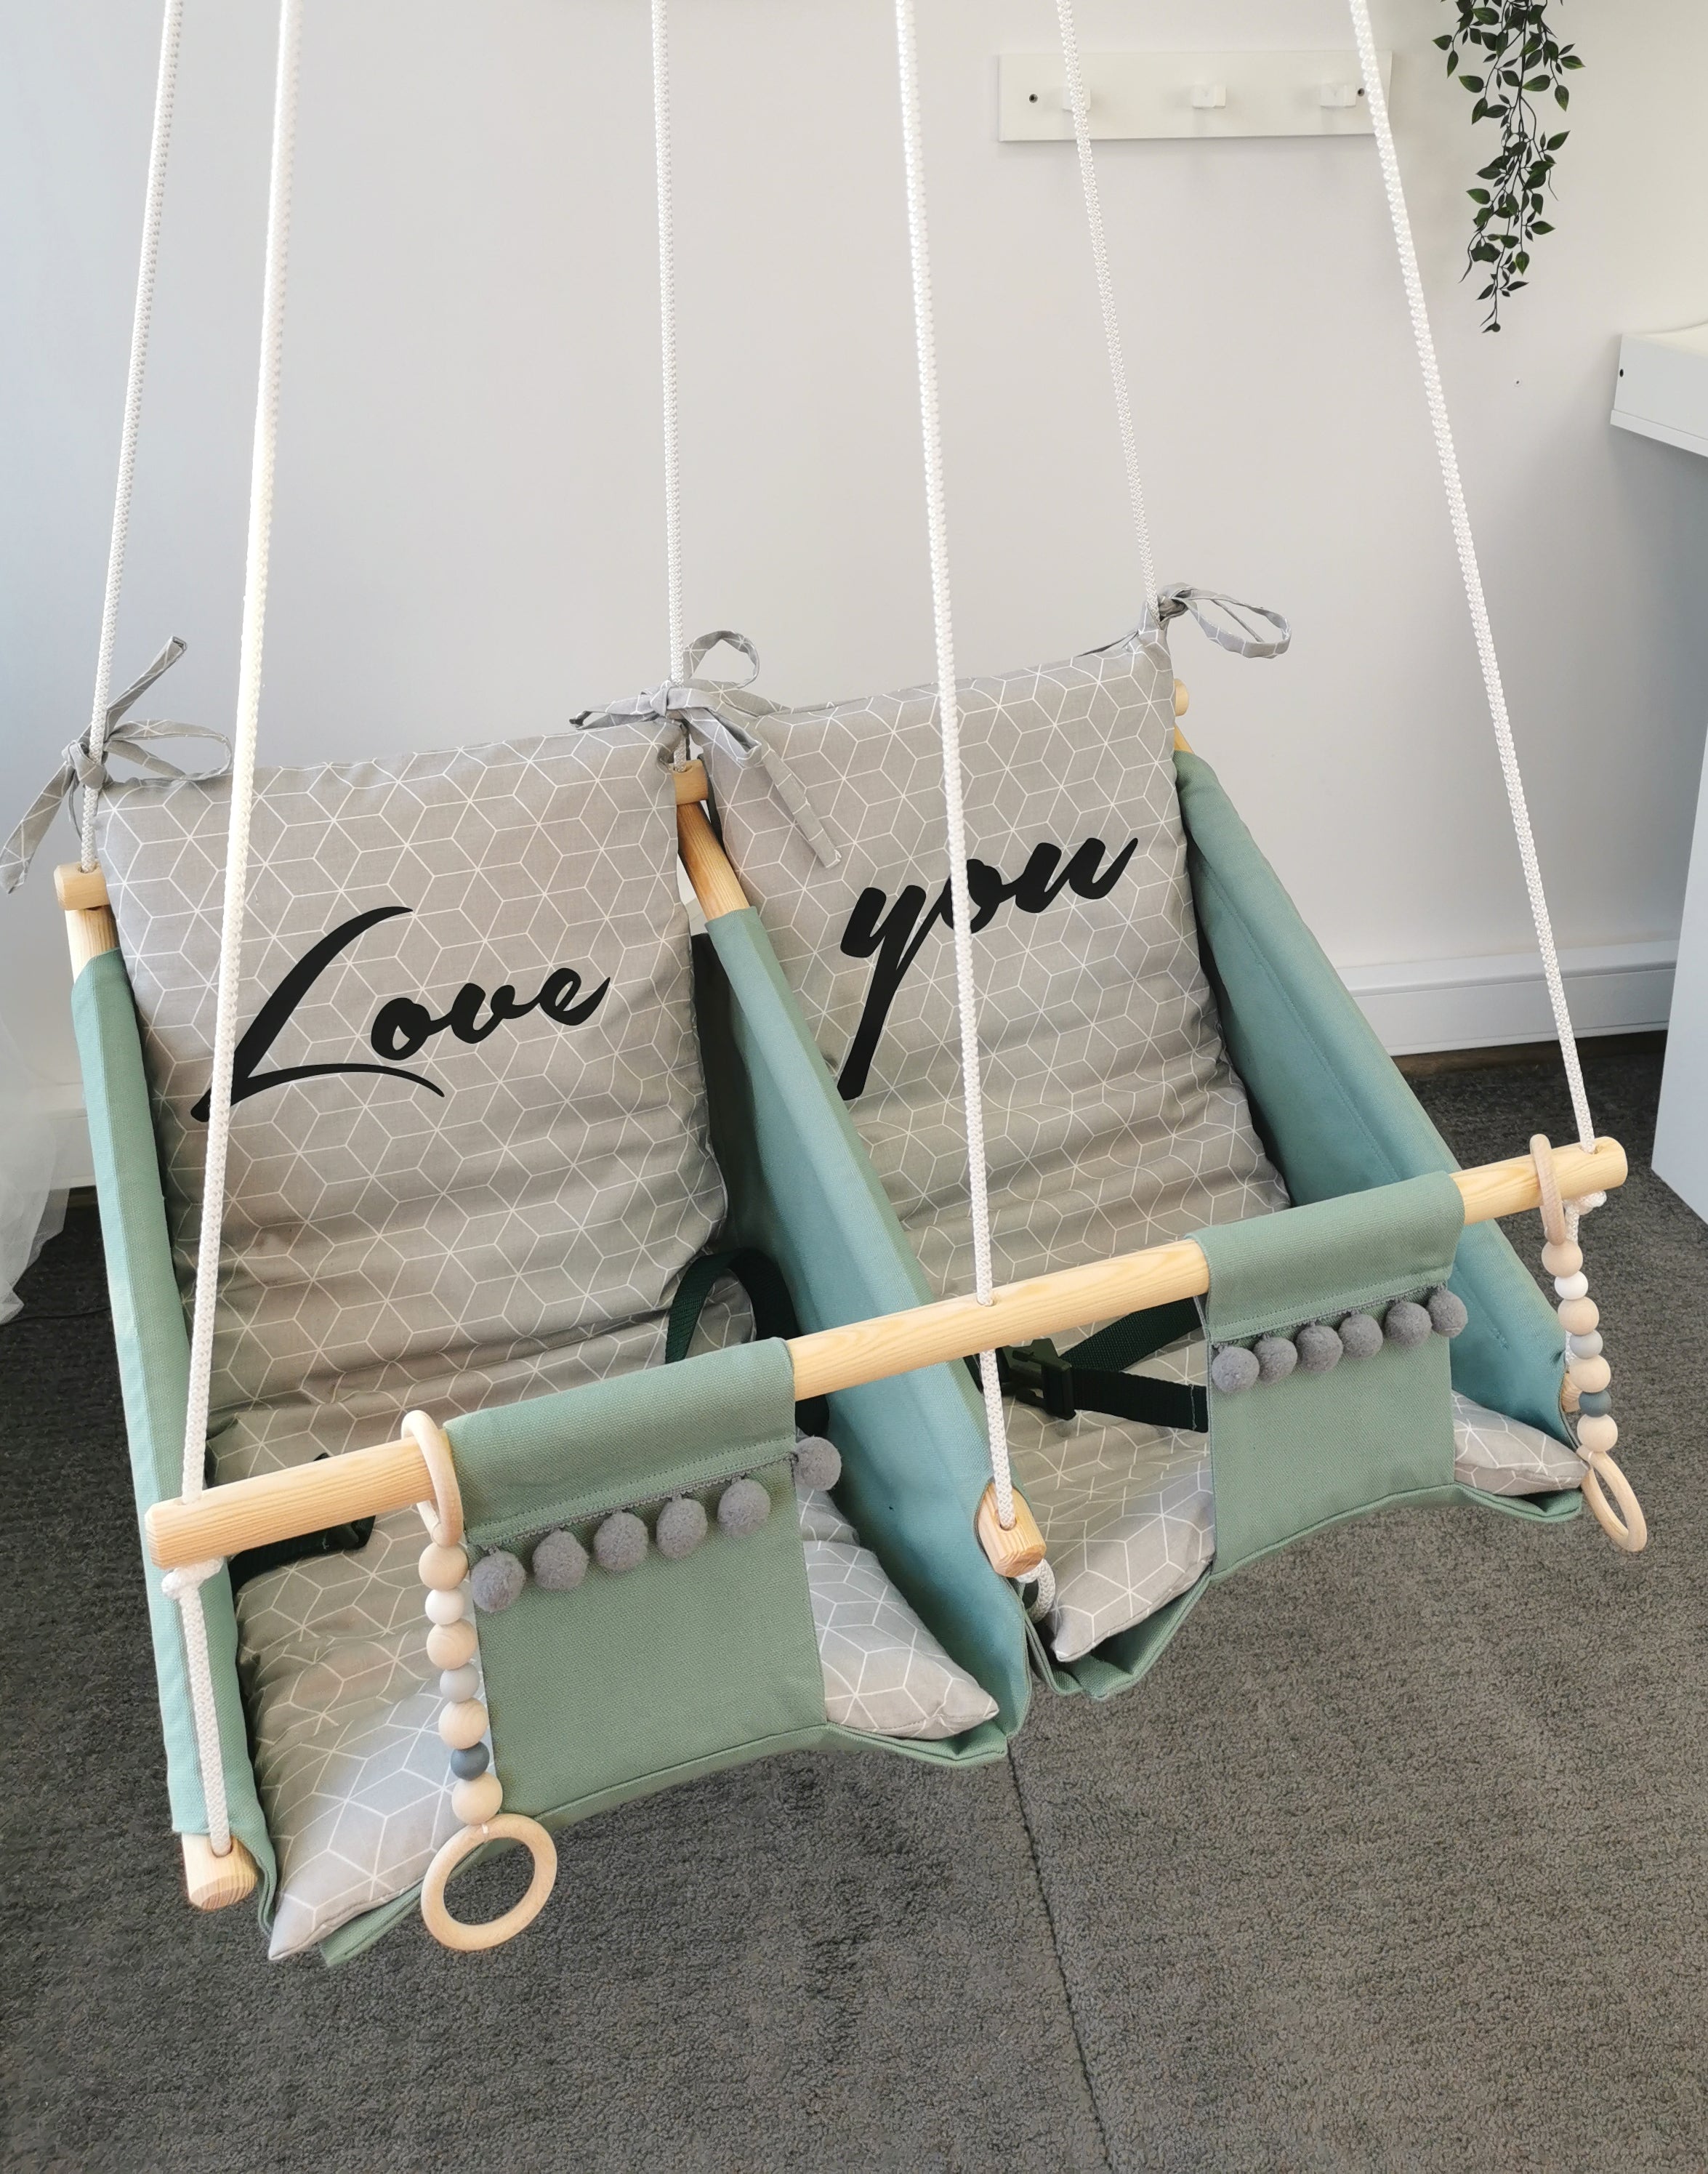 Baby Twin hammock personalize gift idea